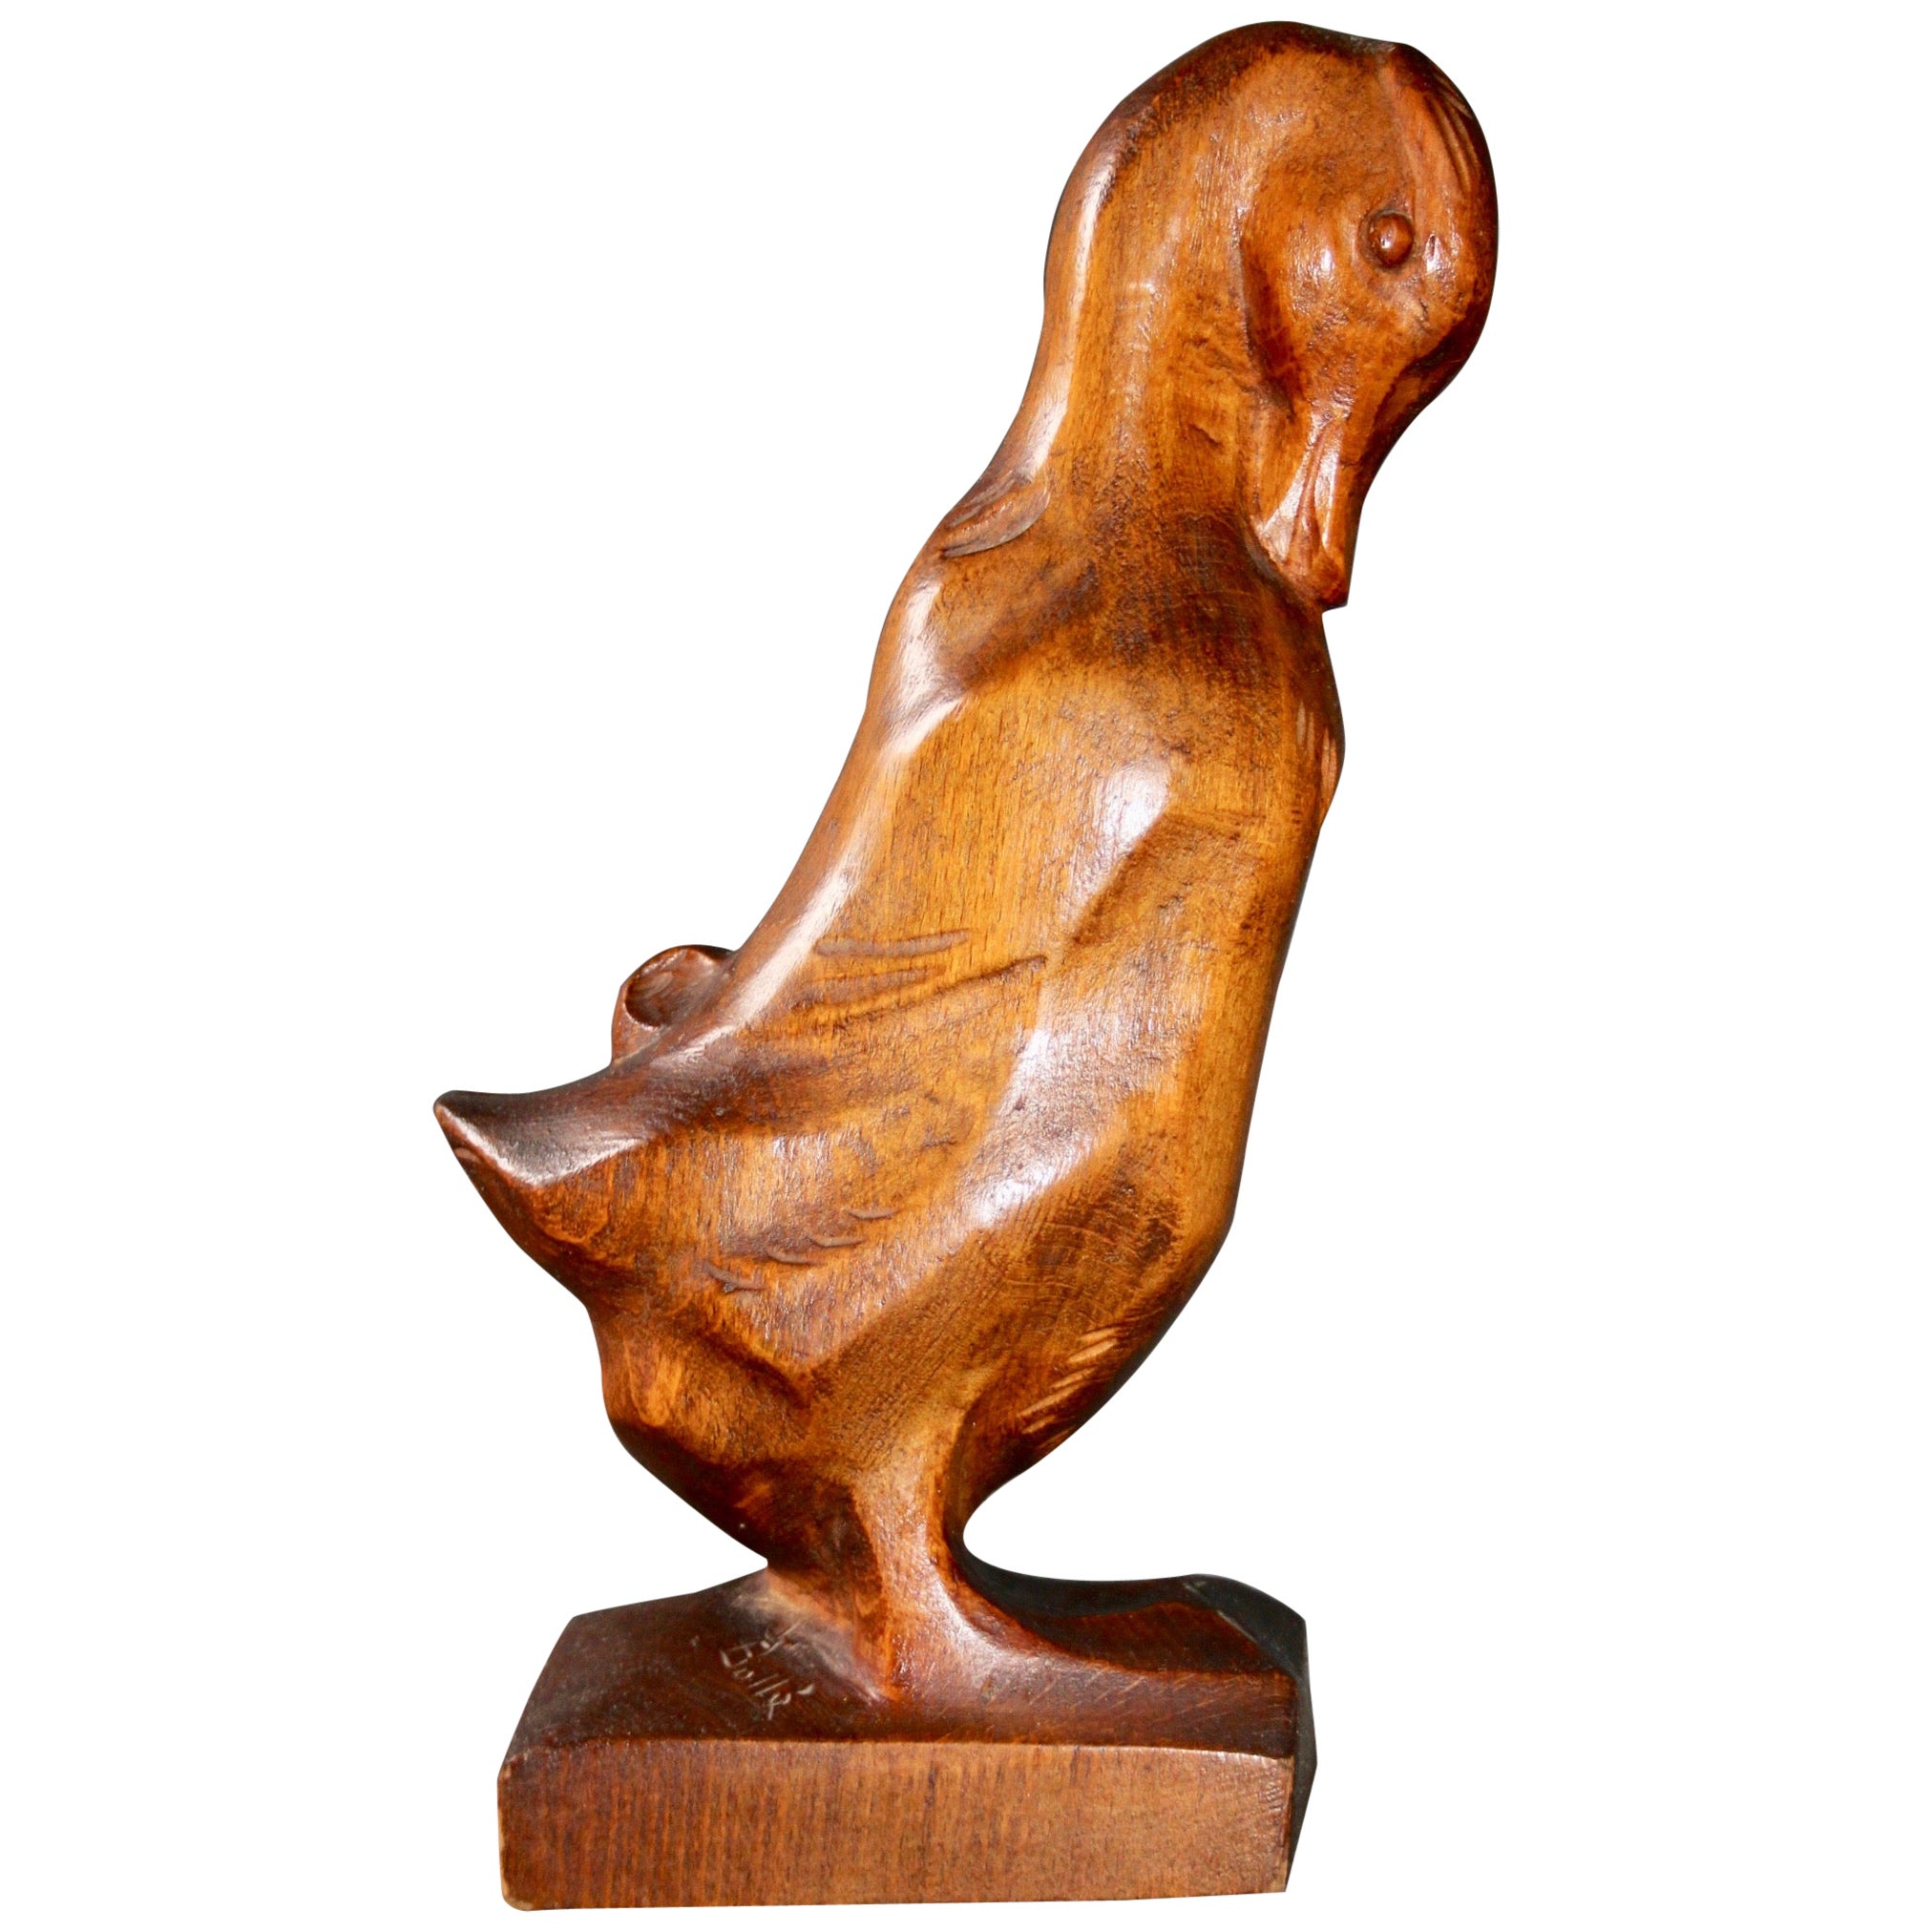 Wood Duck Sculpture